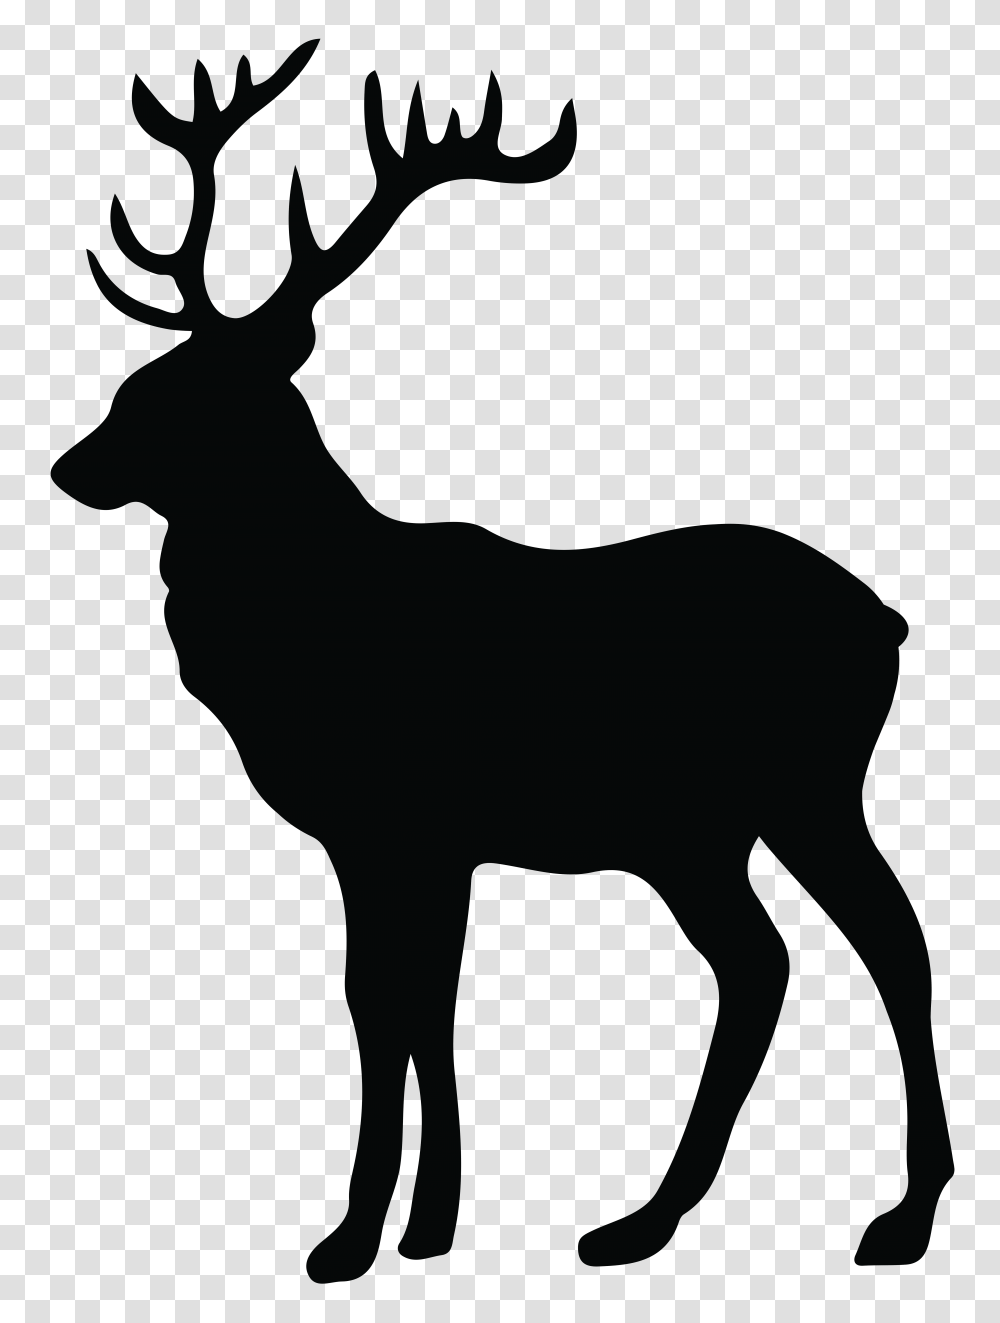 Deer Antler Computer Icons Clip Art Deer Download, Mammal, Animal, Wildlife, Silhouette Transparent Png